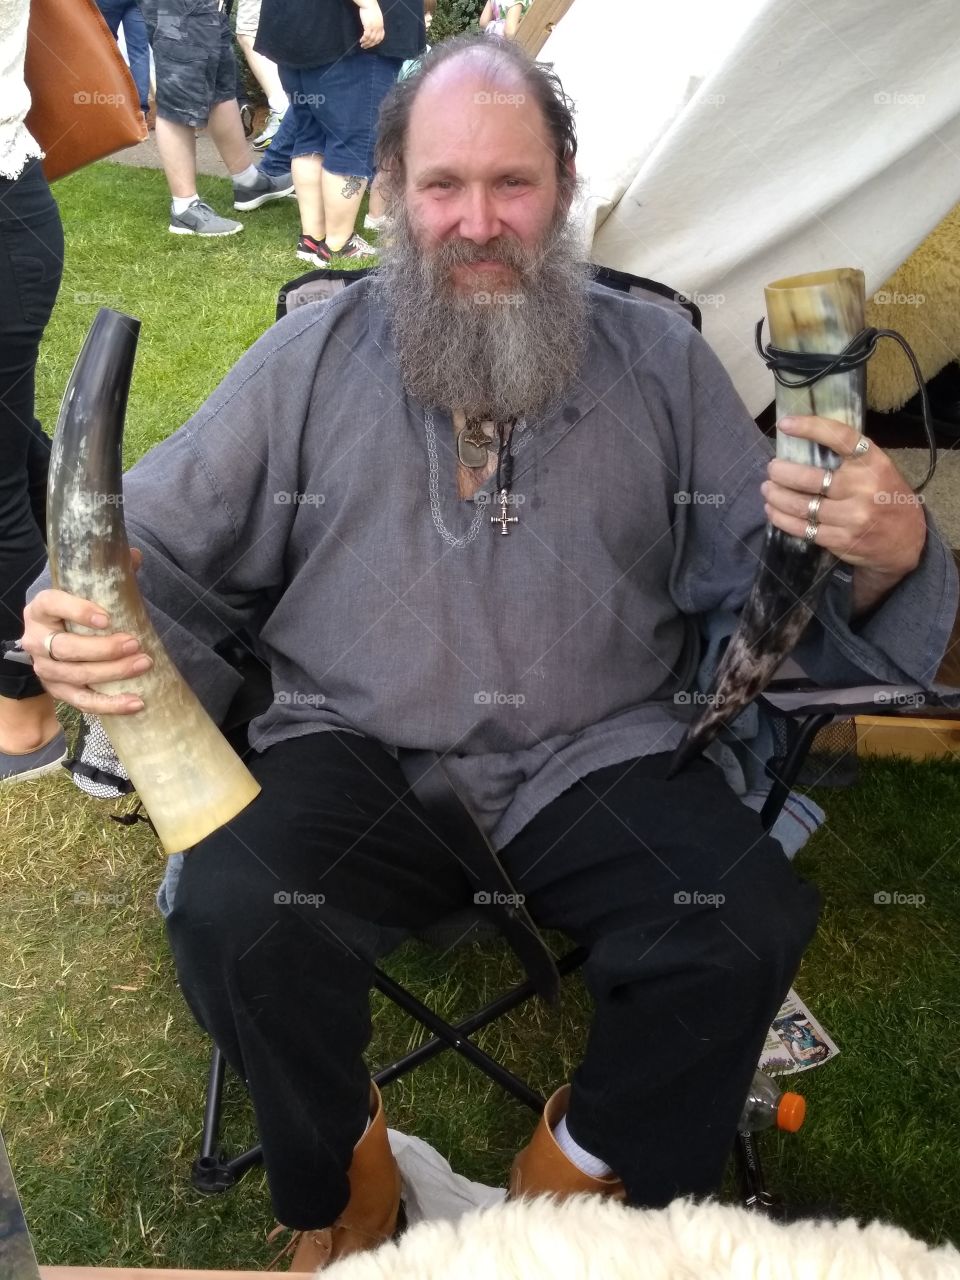 viking in garb with drinkingnhorns